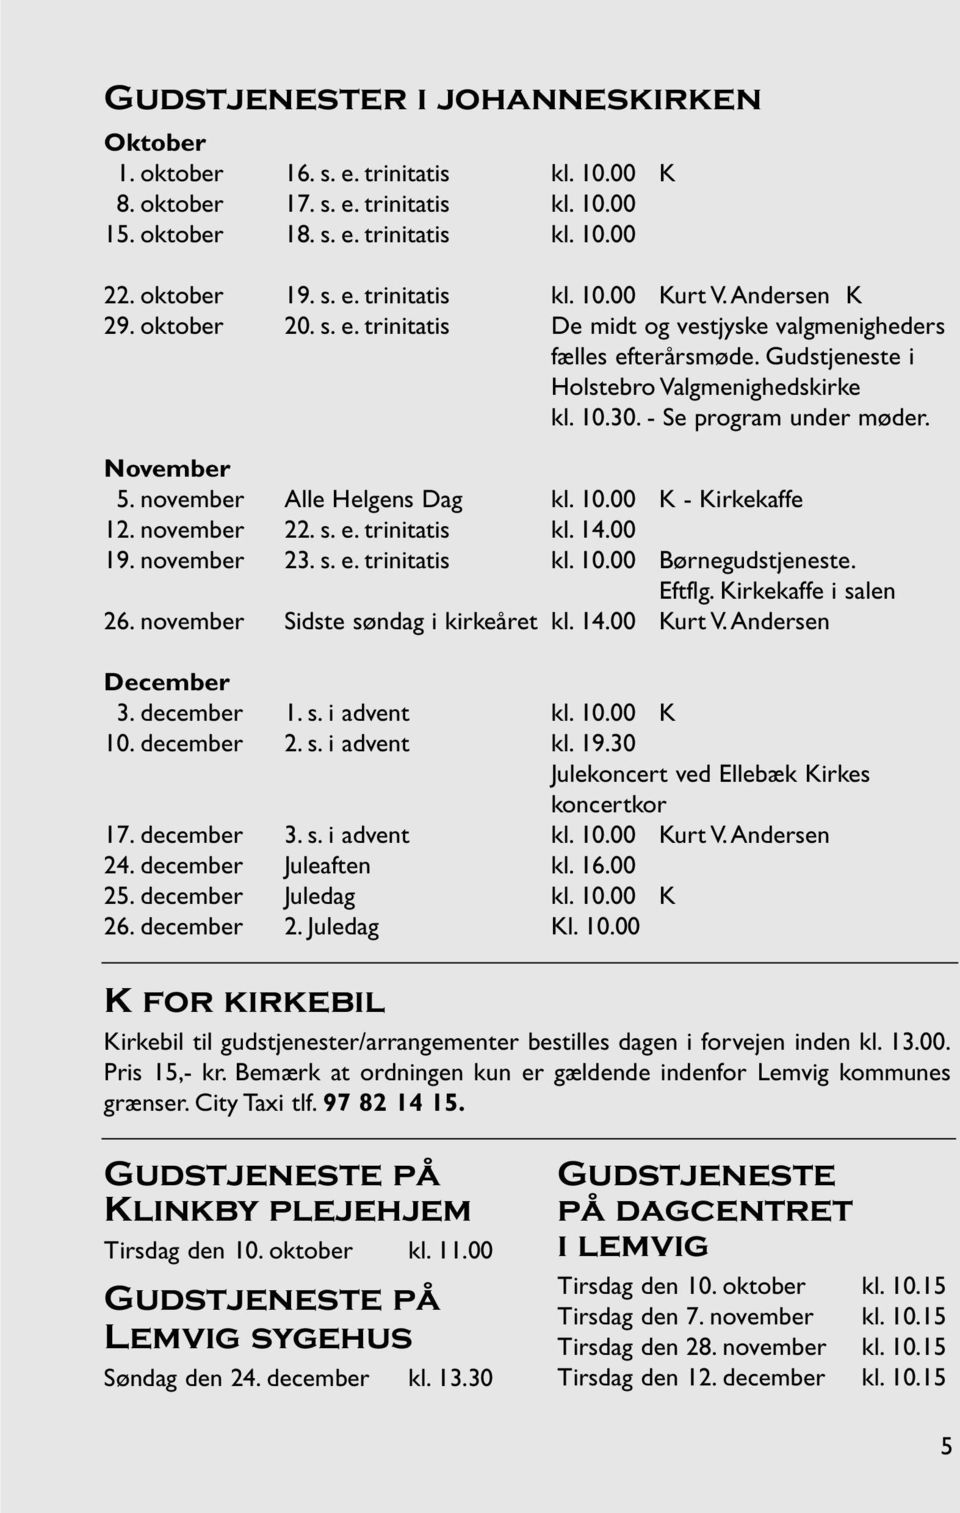 november Alle Helgens Dag kl.10.00 K - Kirkekaffe 12.november 22.s.e.trinitatis kl.14.00 19.november 23.s.e.trinitatis kl.10.00 Børnegudstjeneste. Eftflg.Kirkekaffe i salen 26.